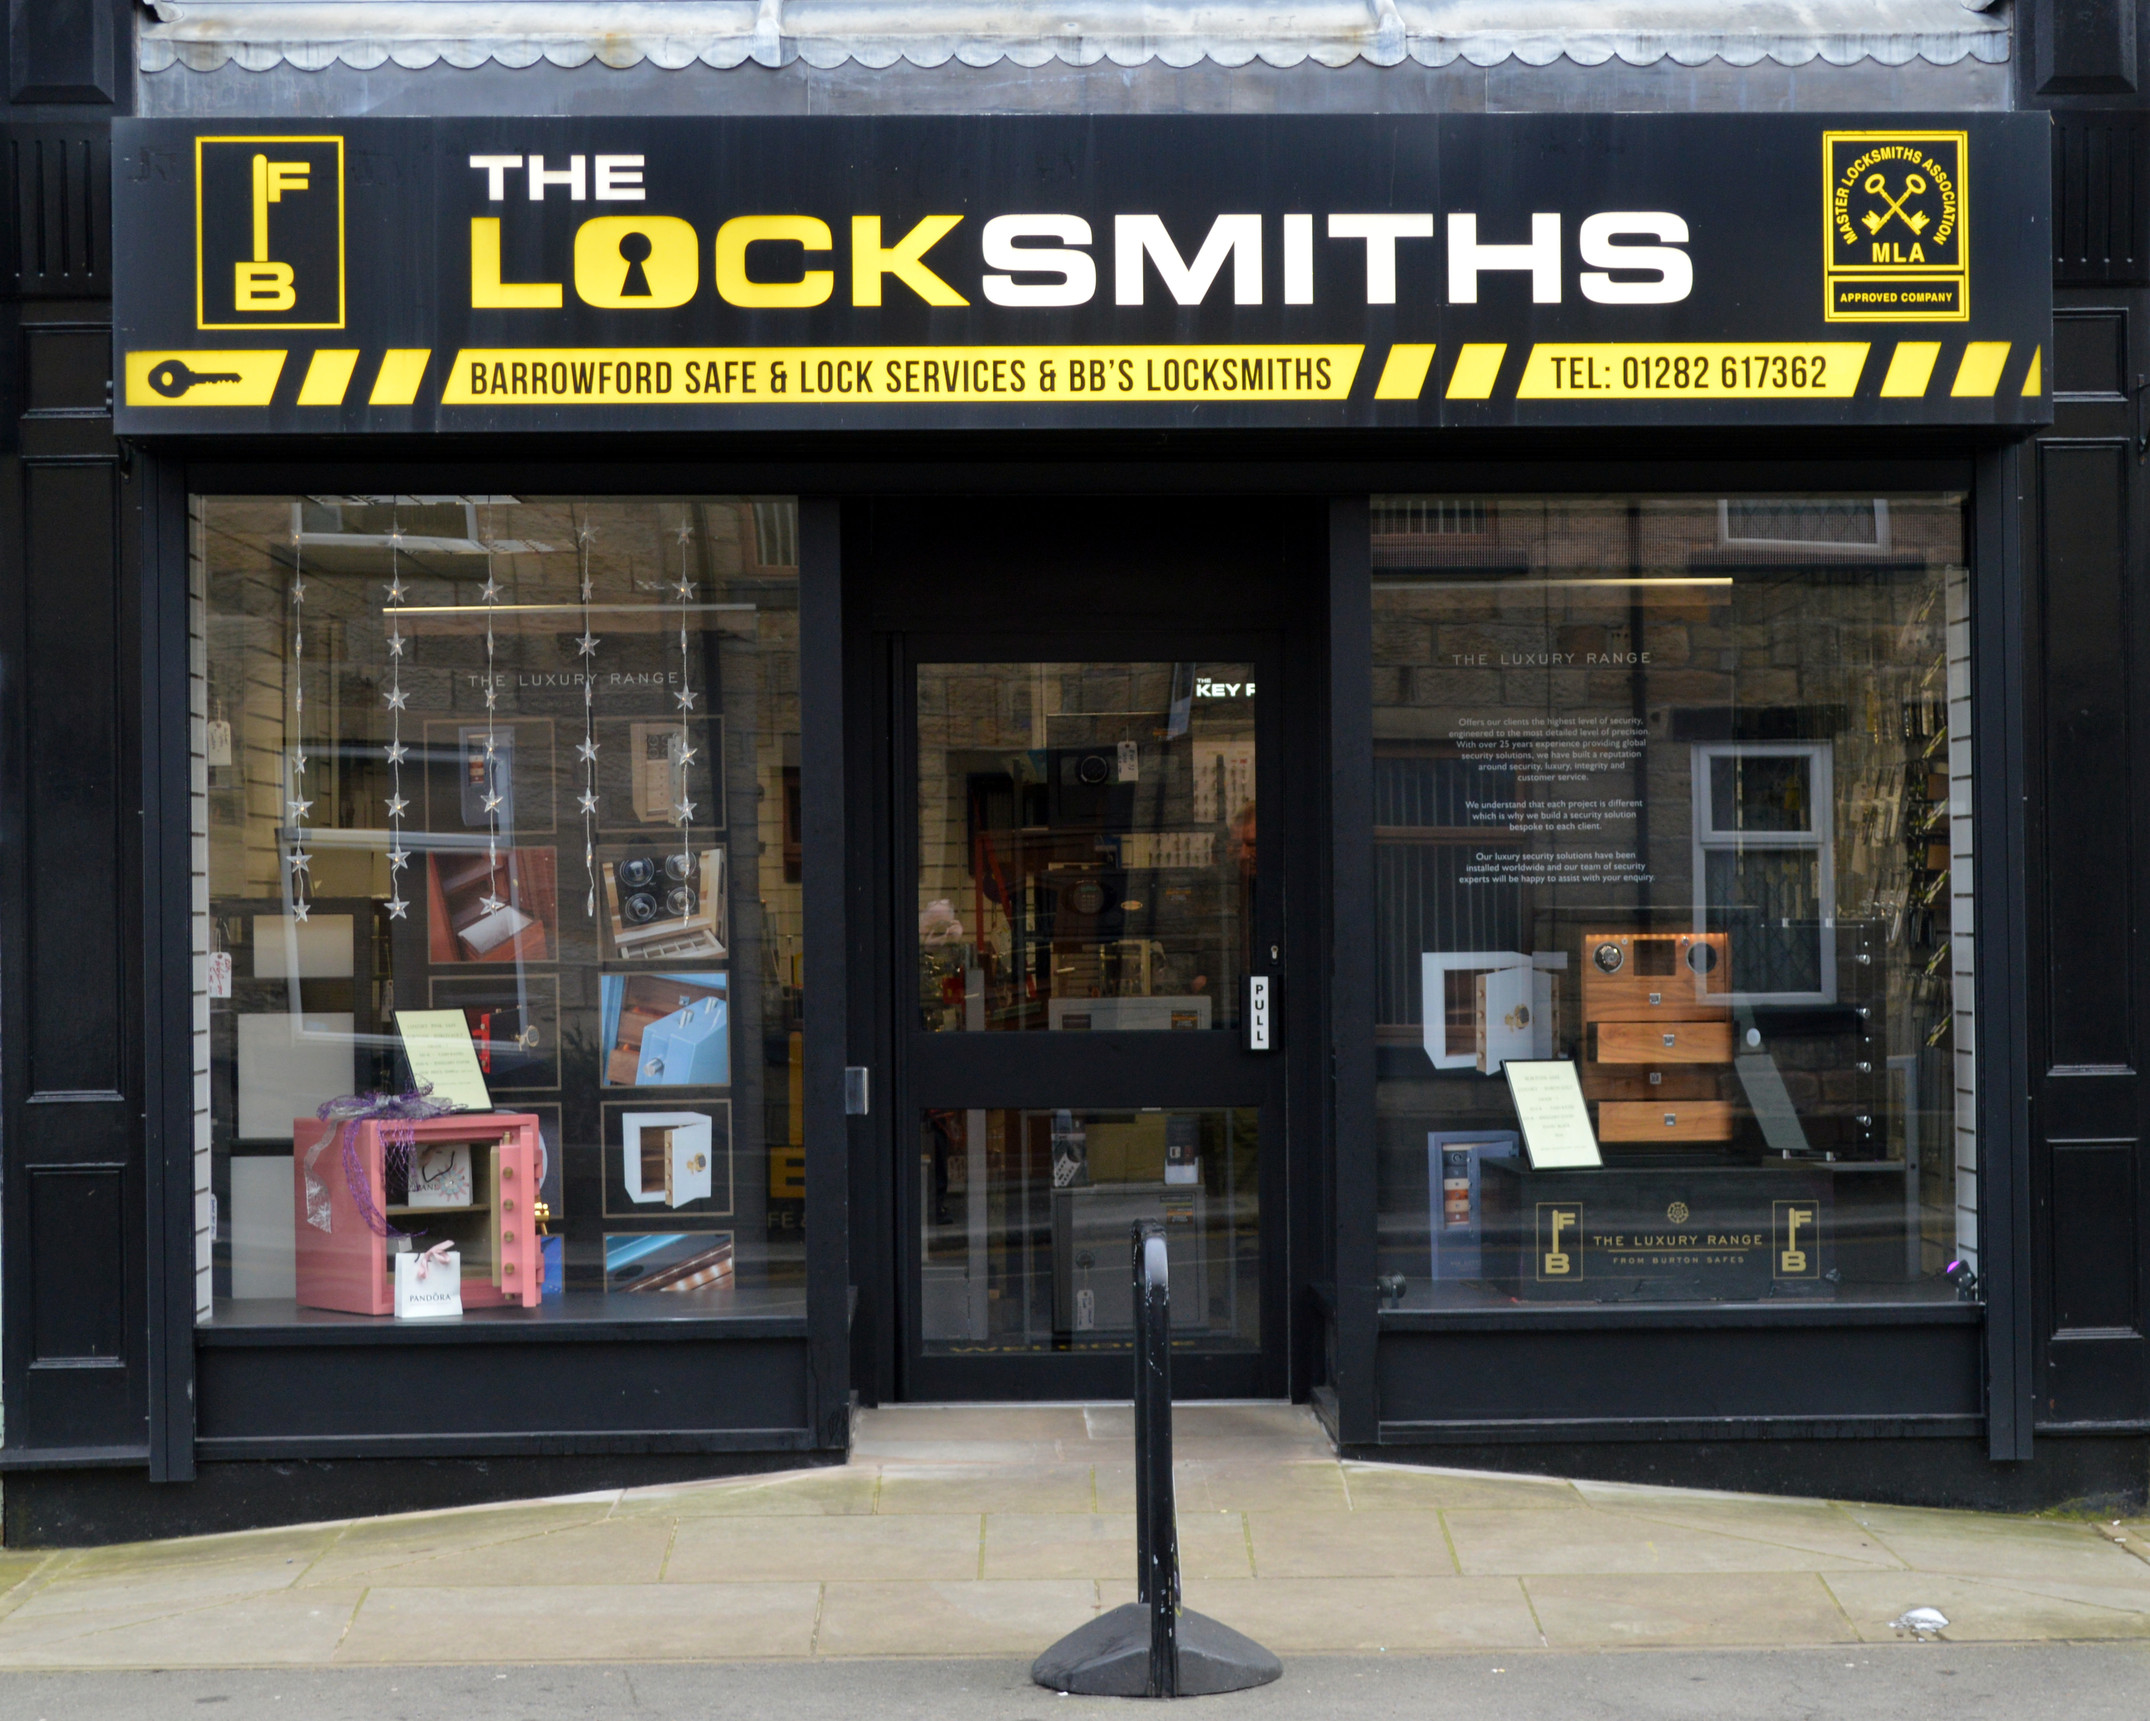 The Locksmiths